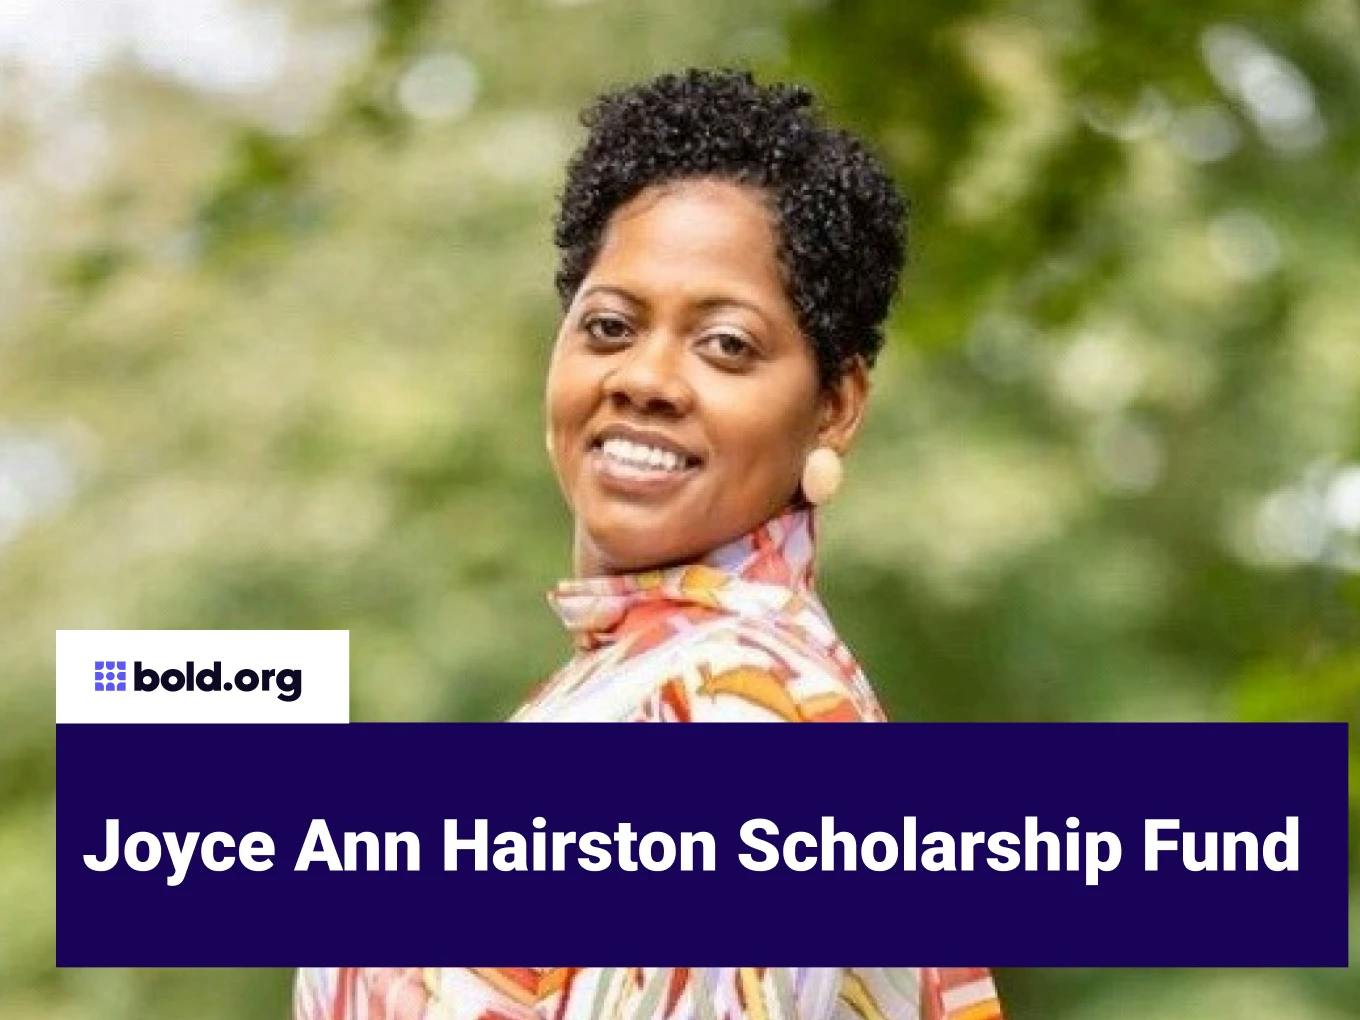 Joyce Ann Hairston Scholarship Fund